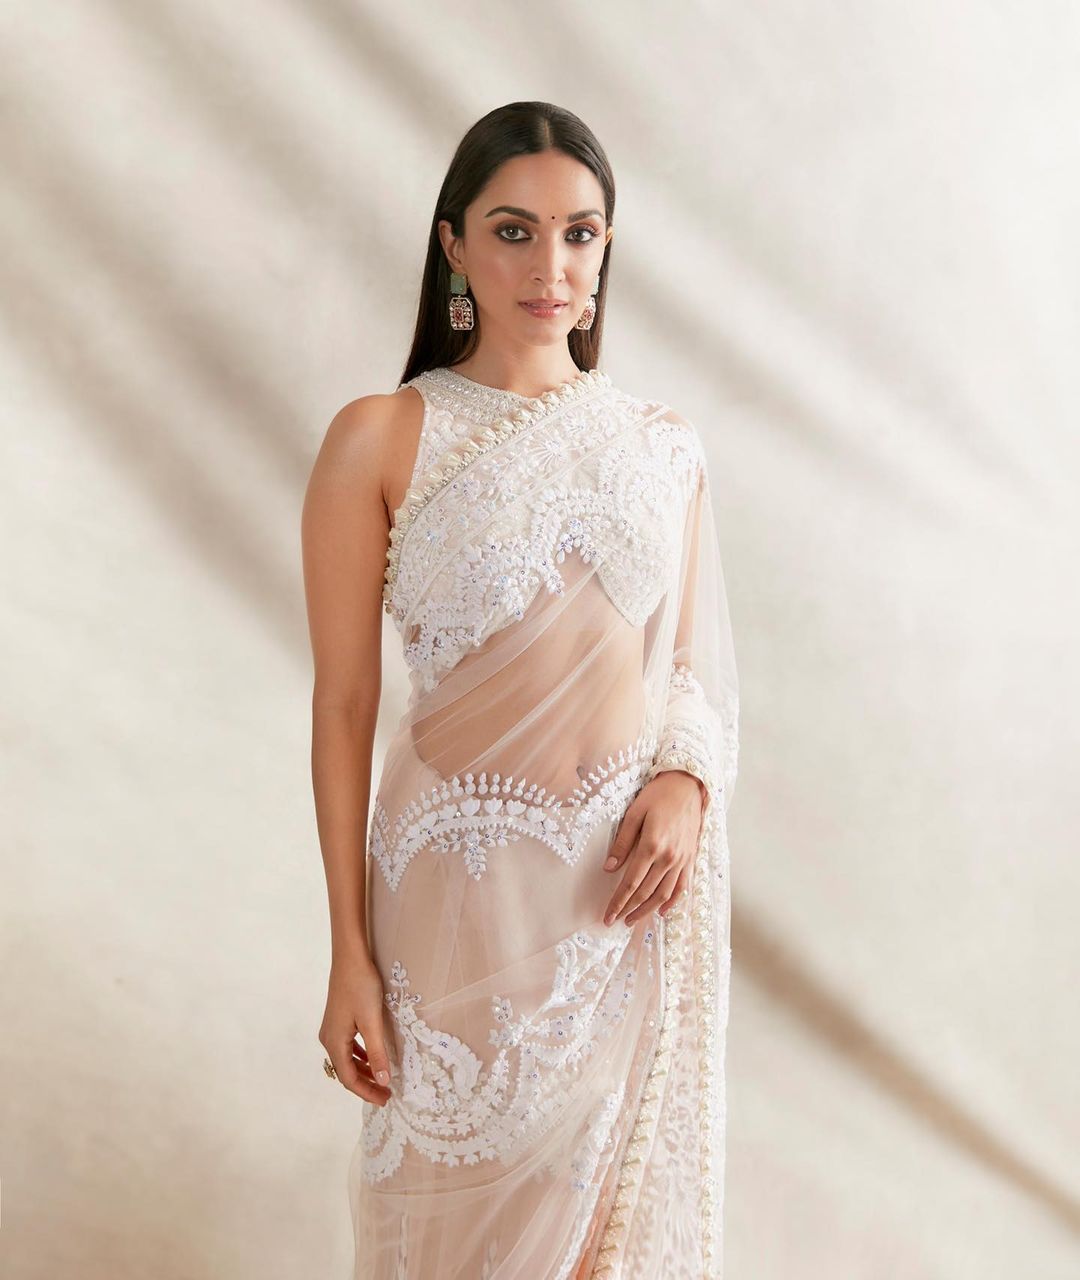 Kiara Advani's floral bralette + skirt set came with romantic layered  detailing